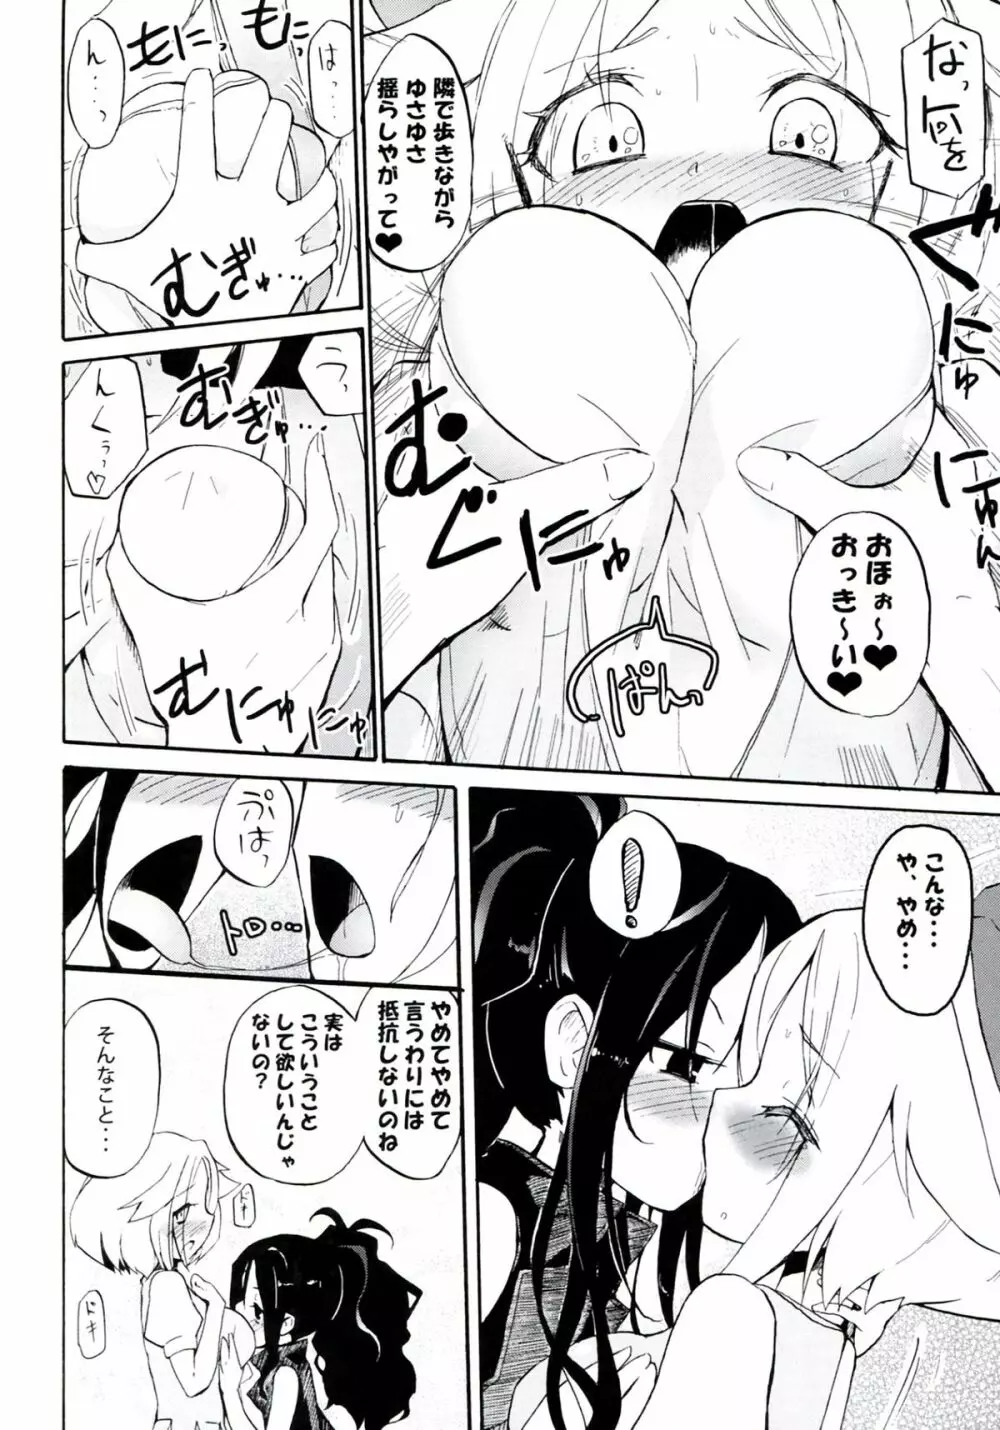 Homuraya Milk ★ Collection 2 - page30